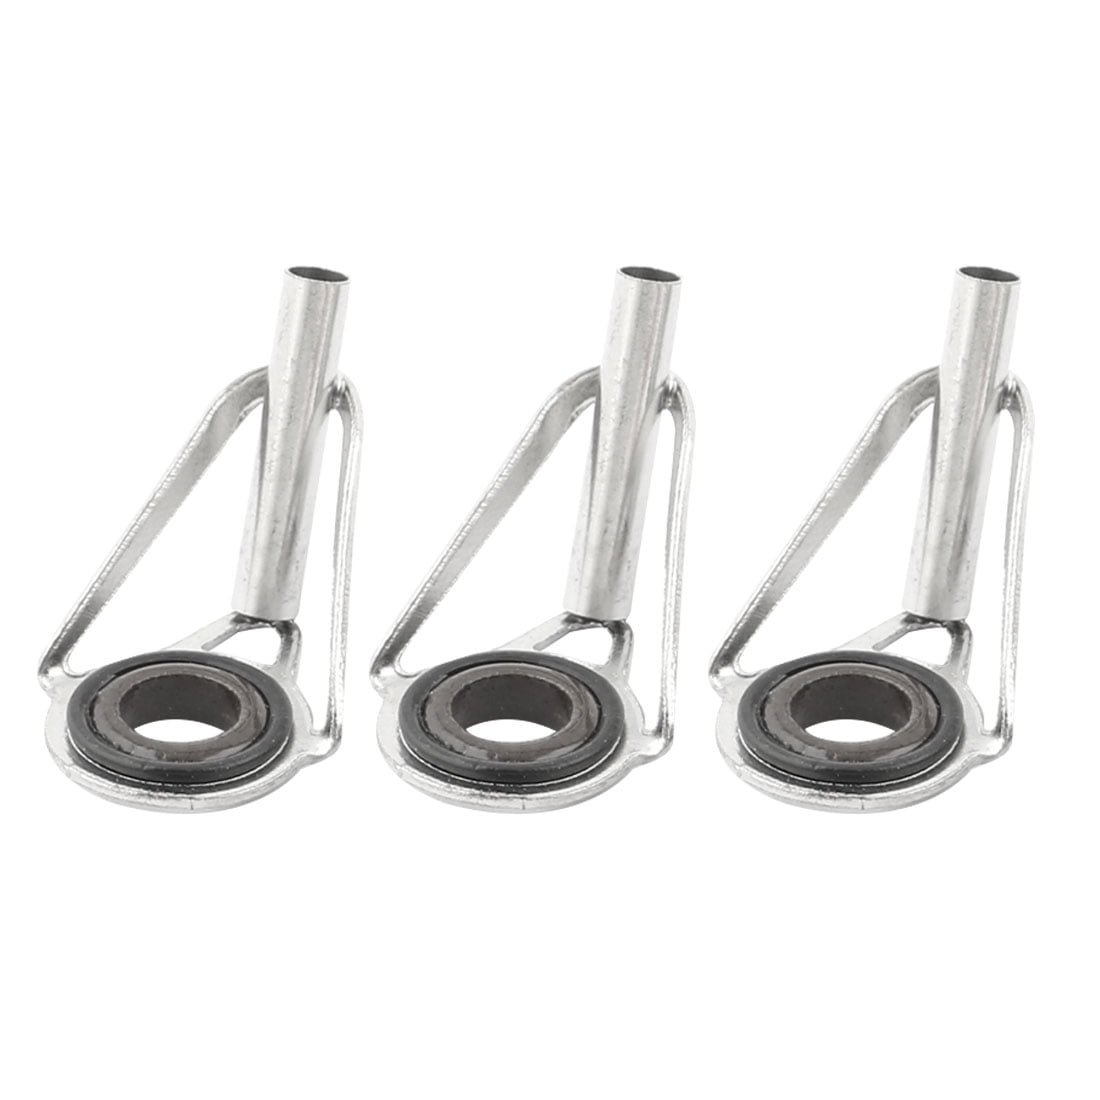 US NEW 8x Ceramic Fishing Rod Guide Tip Top Eye Ring Line Repair Kit Spin  Caster